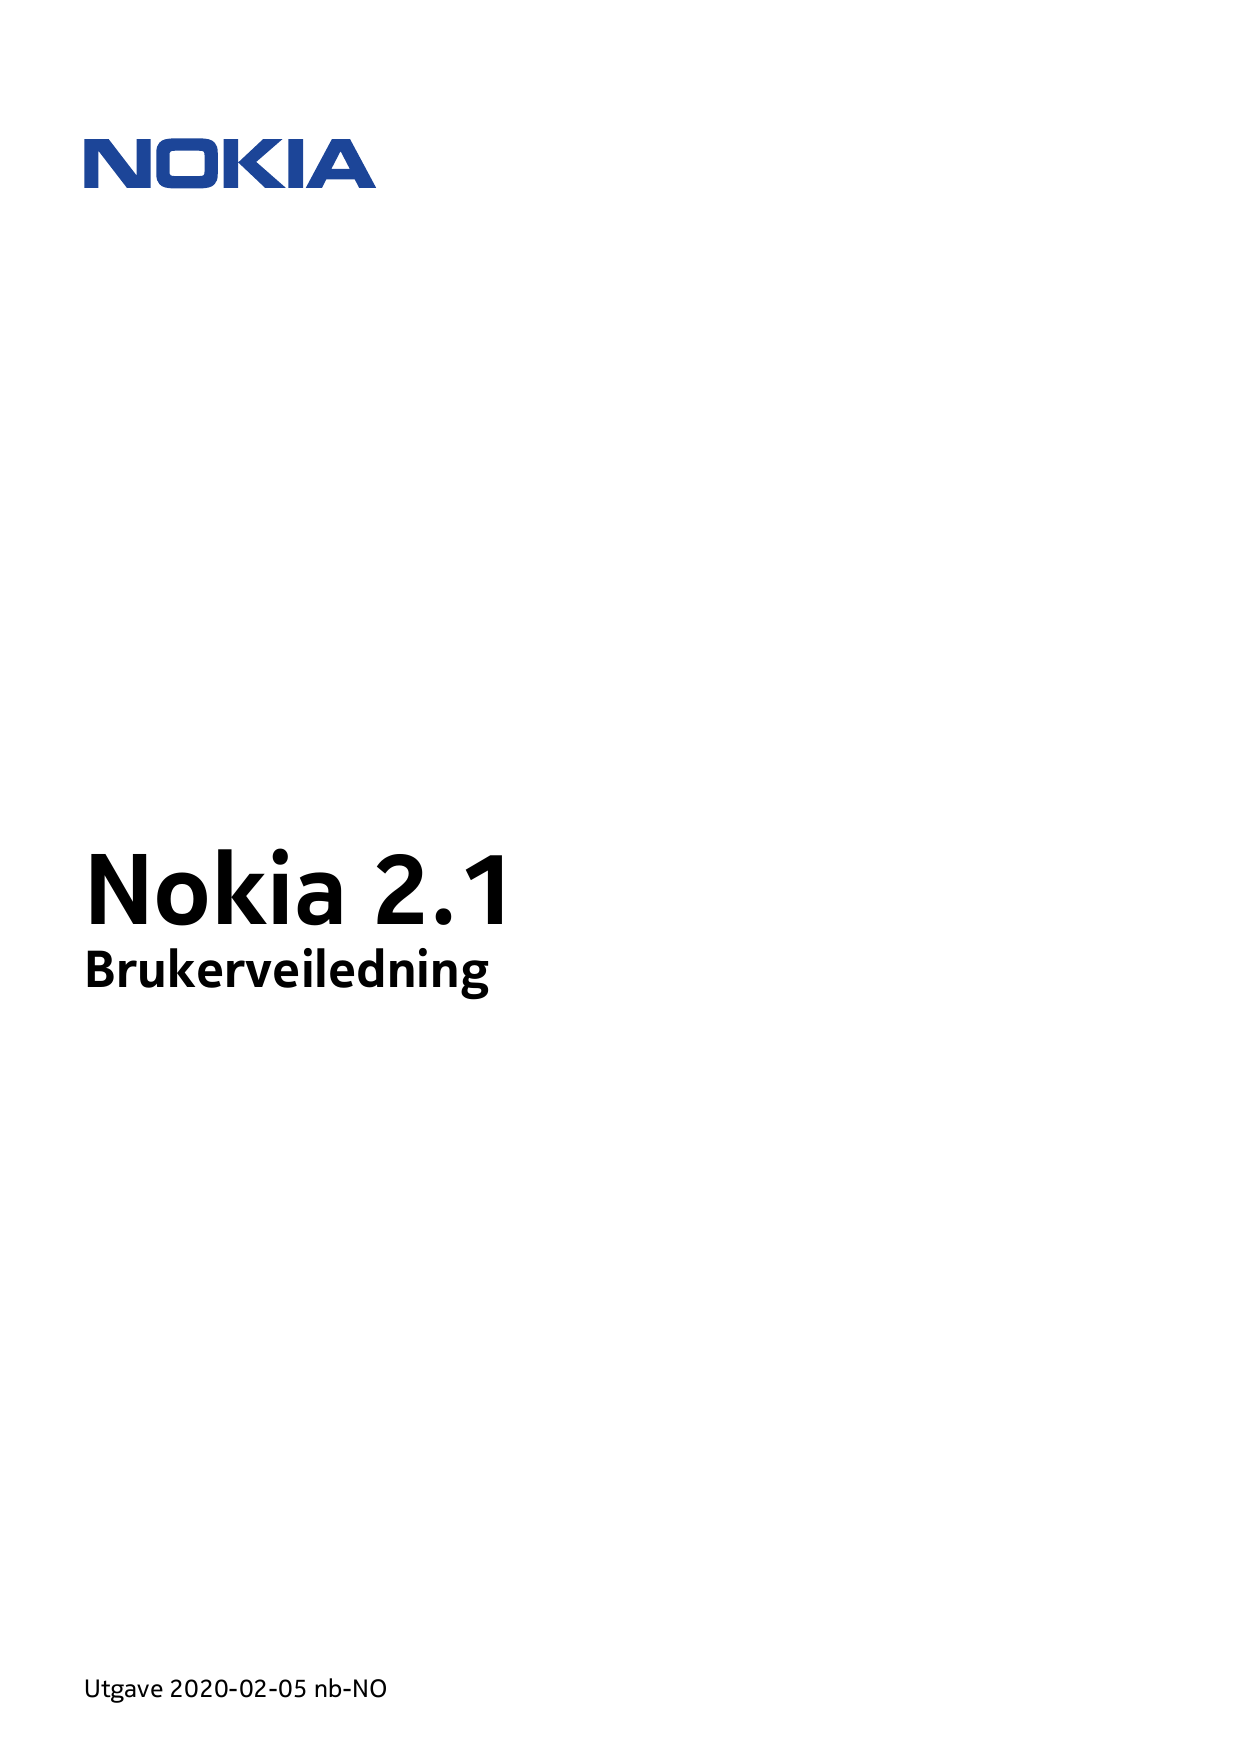 Nokia 2.1BrukerveiledningUtgave 2020-02-05 nb-NO